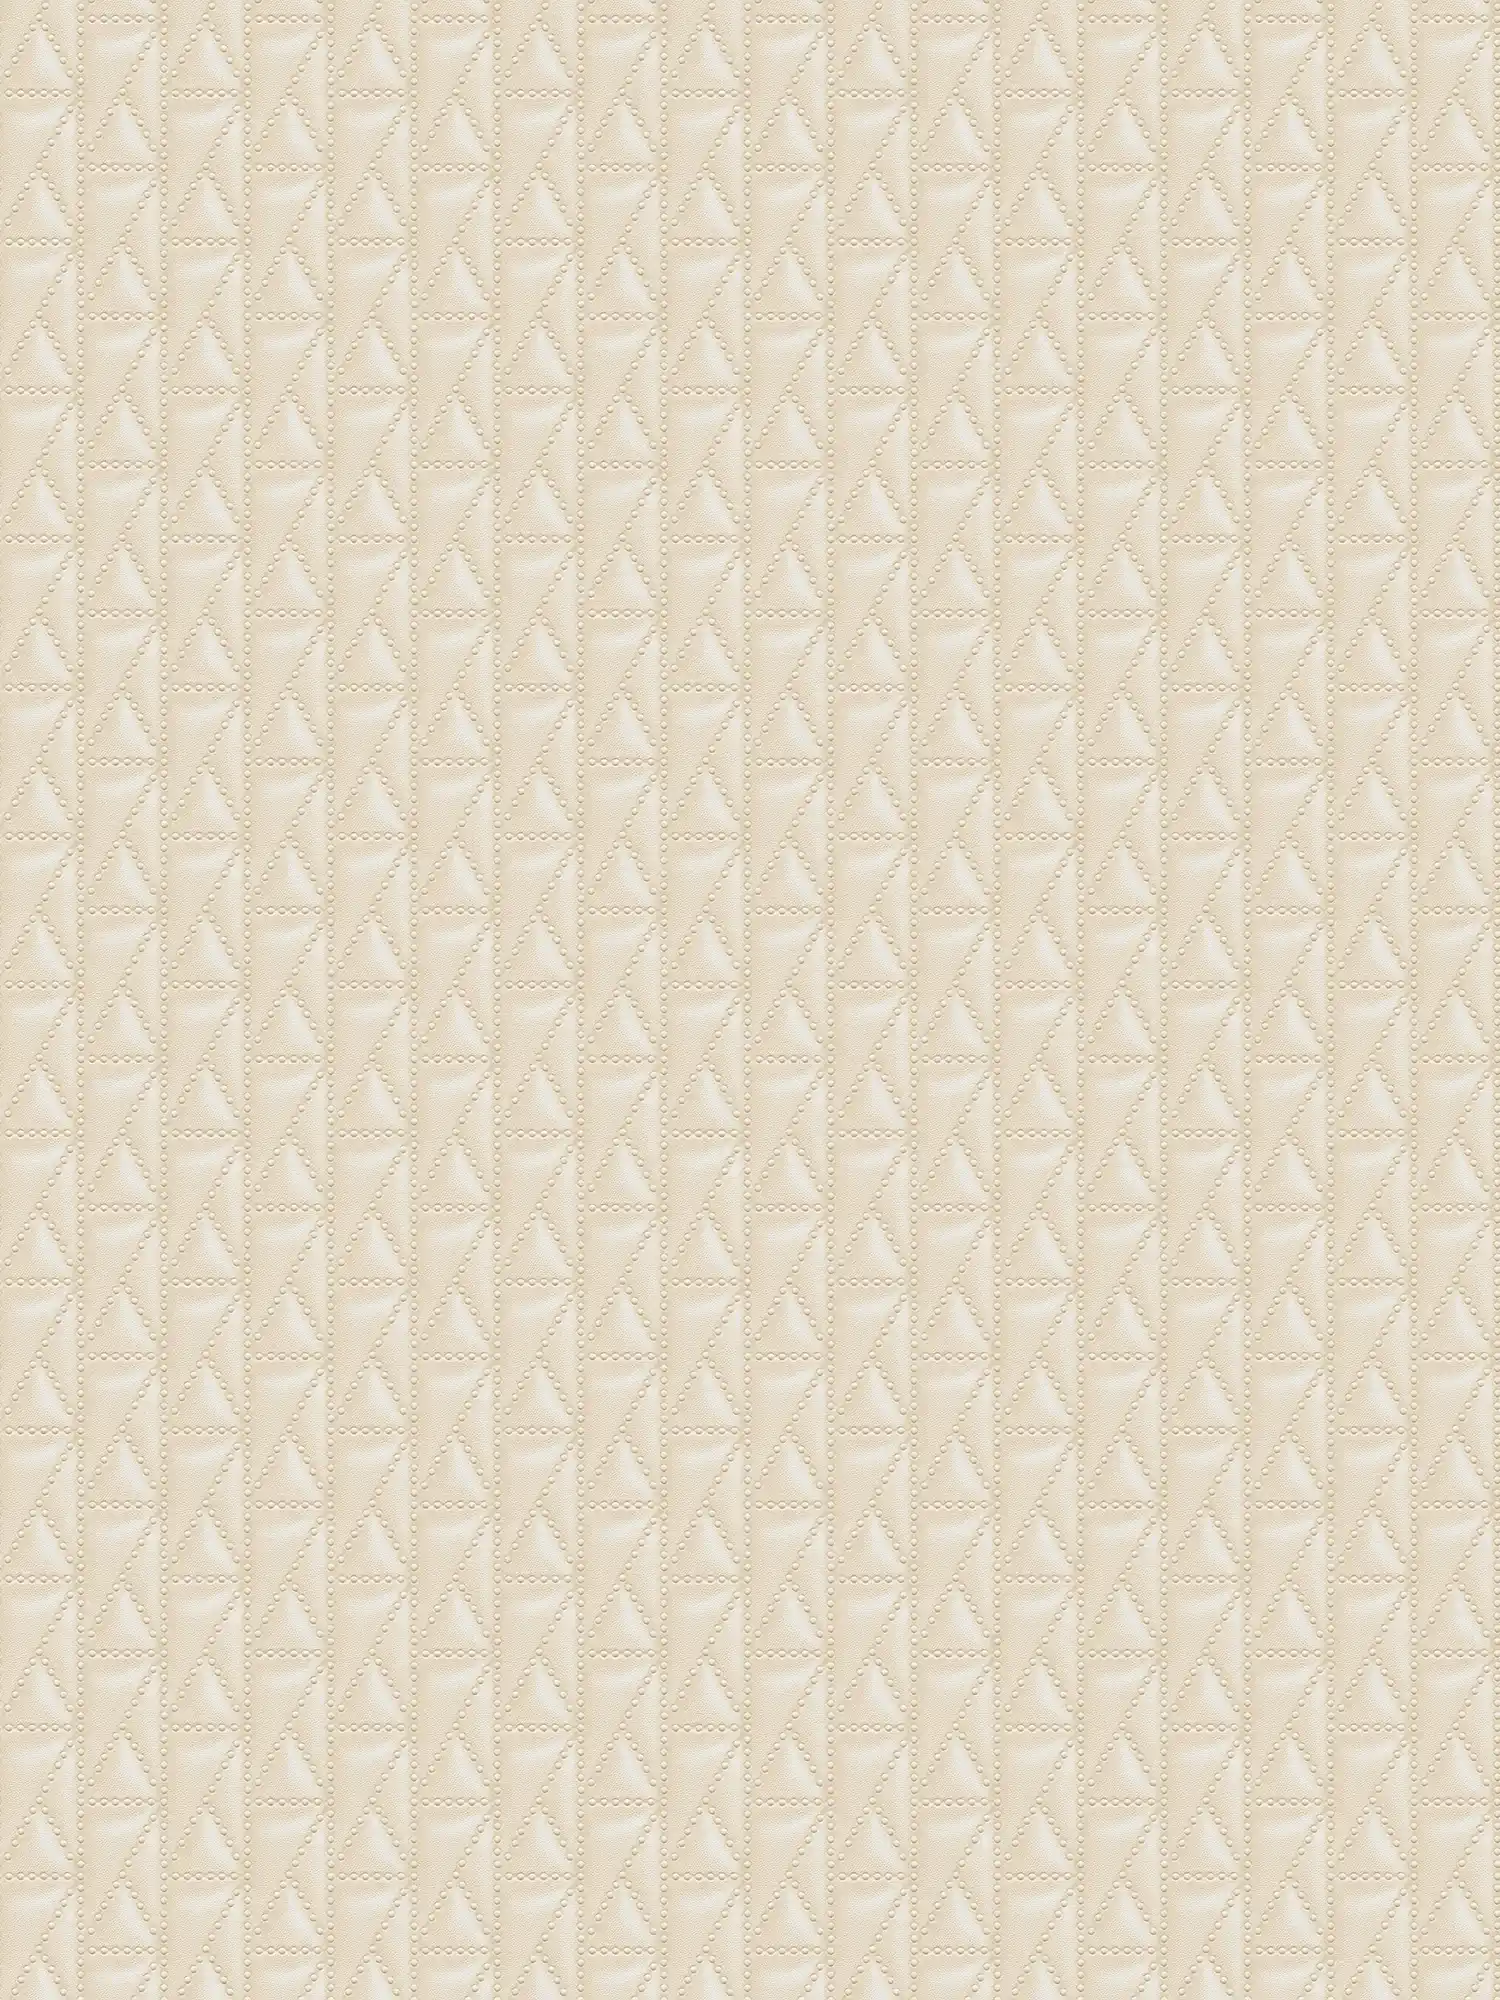 Karl LAGERFELD behangpapier Kuilted Bag Design - Beige, Cream
